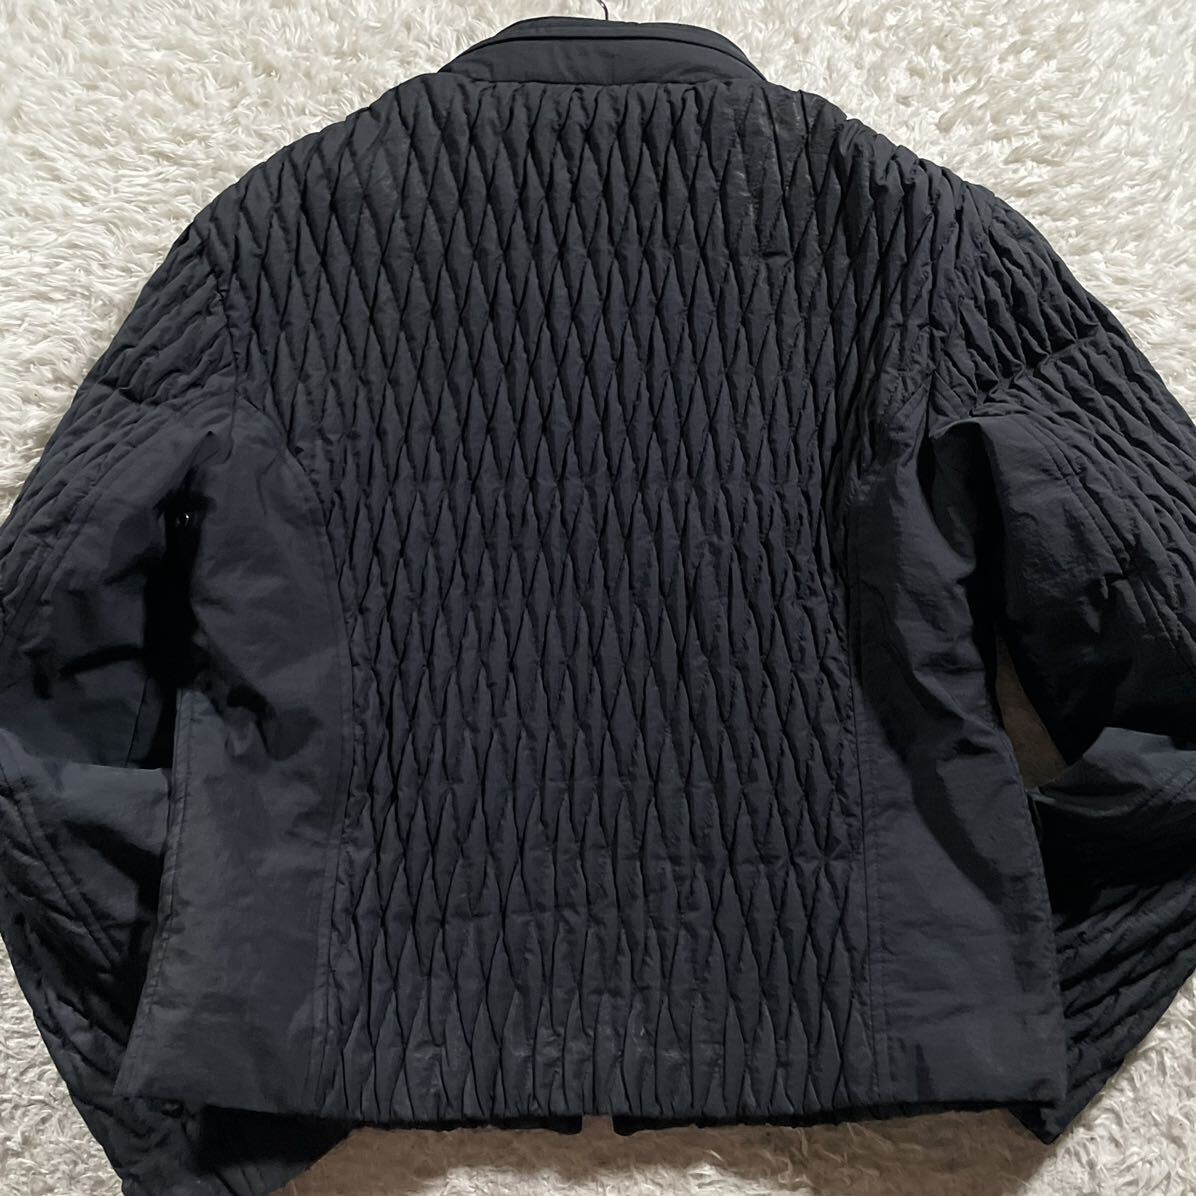 L size * Armani koretsio-ni unevenness 3D quilting nylon jacket ARMANI COLLEZIONI hood storage type double Zip navy 50